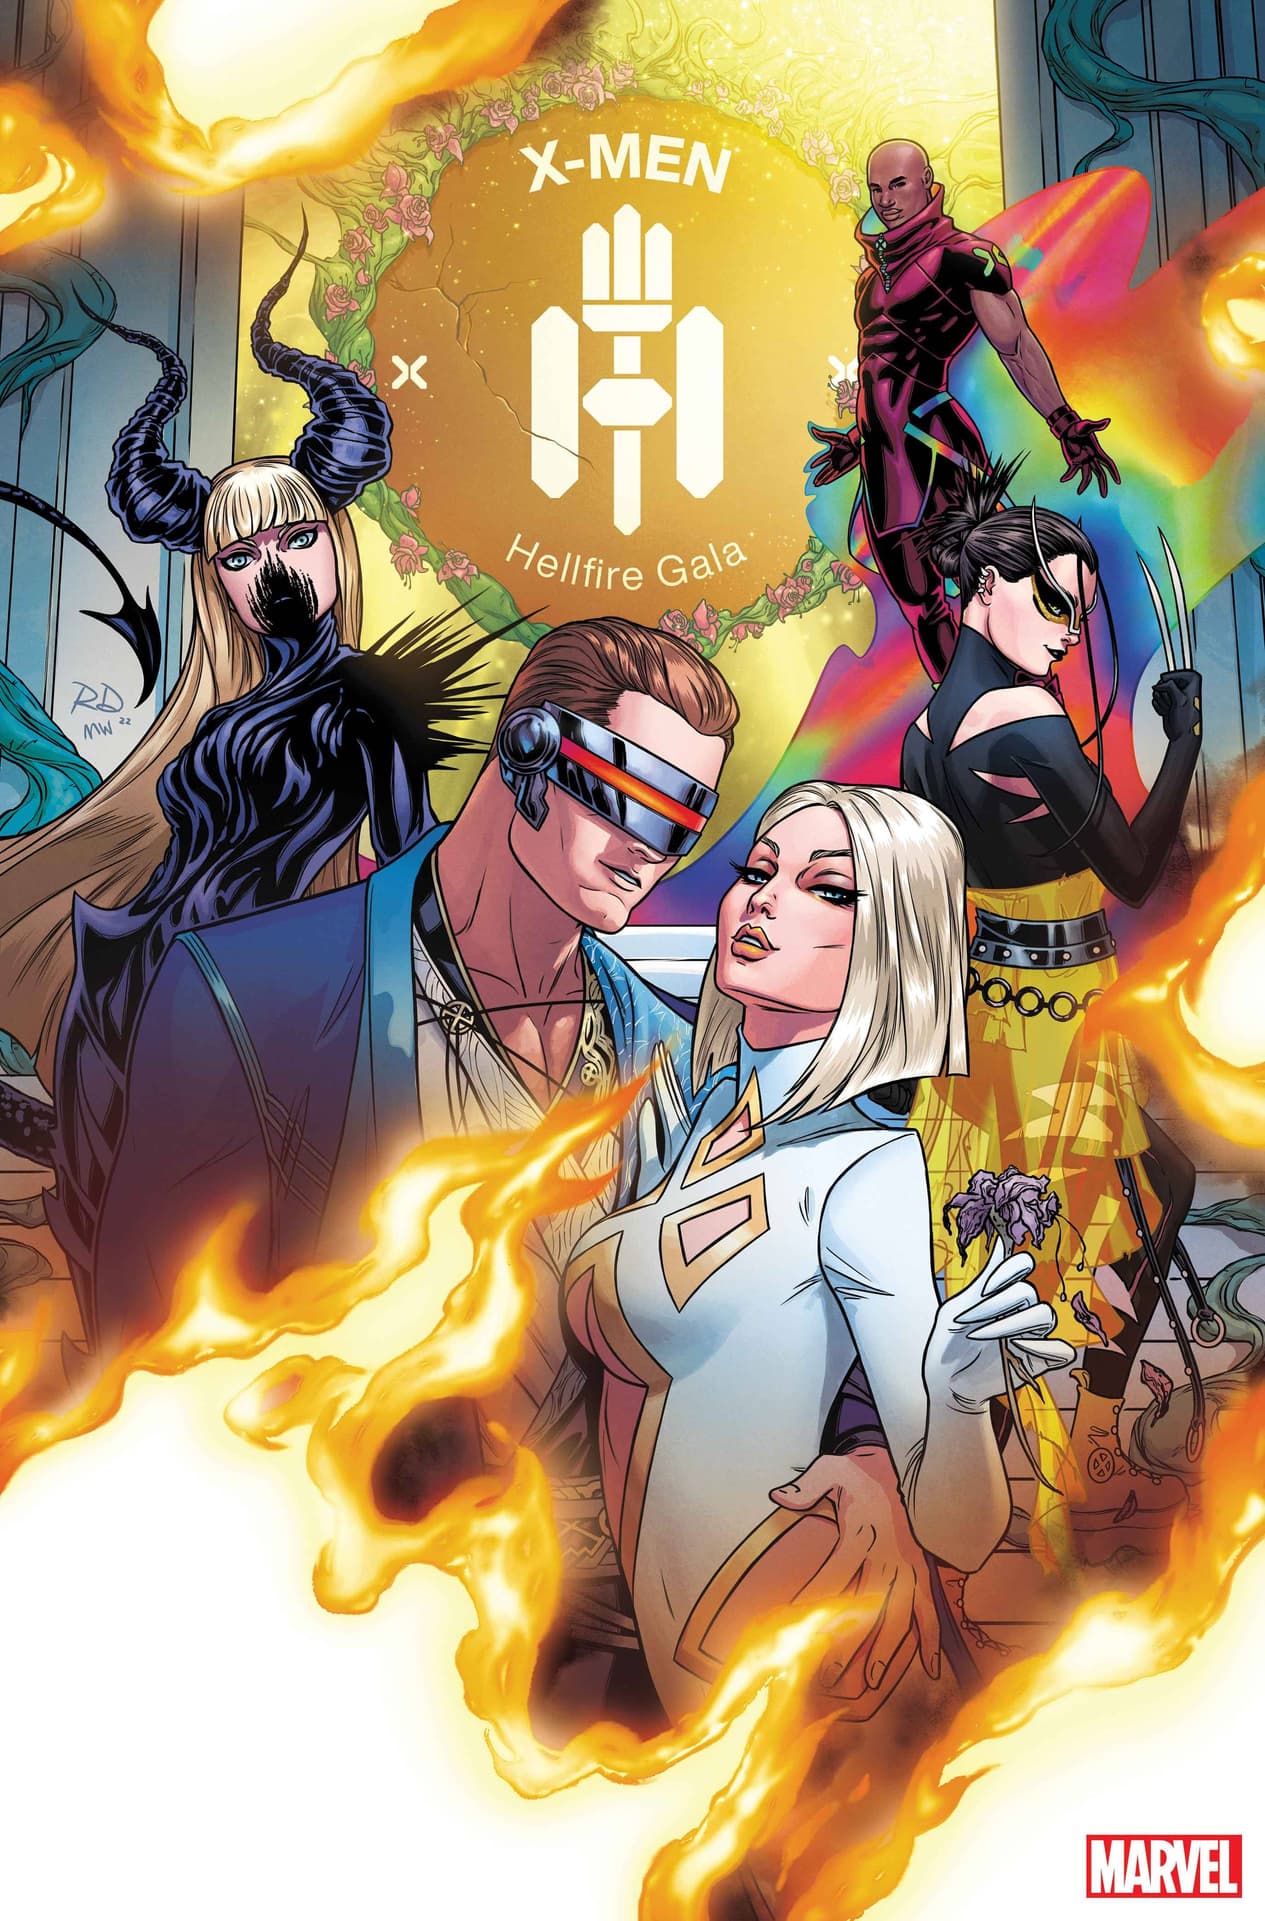 X-MEN: HELLFIRE GALA #1 main cover by Russell Dauterman